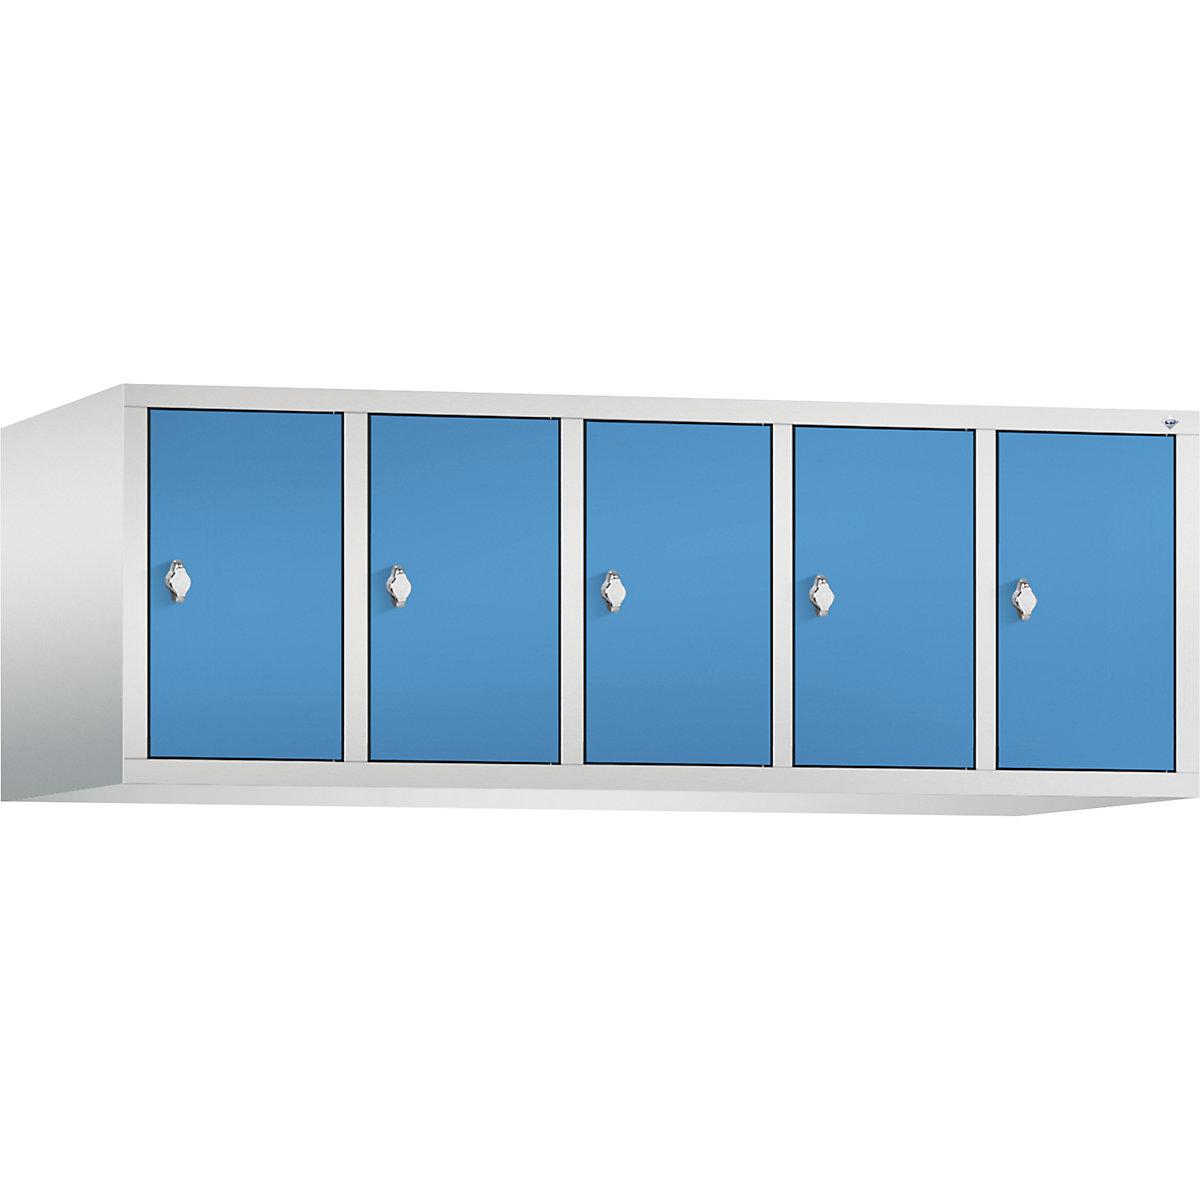 C+P – Altillo CLASSIC, 5 compartimentos, anchura de compartimento 300 mm, gris luminoso / azul luminoso